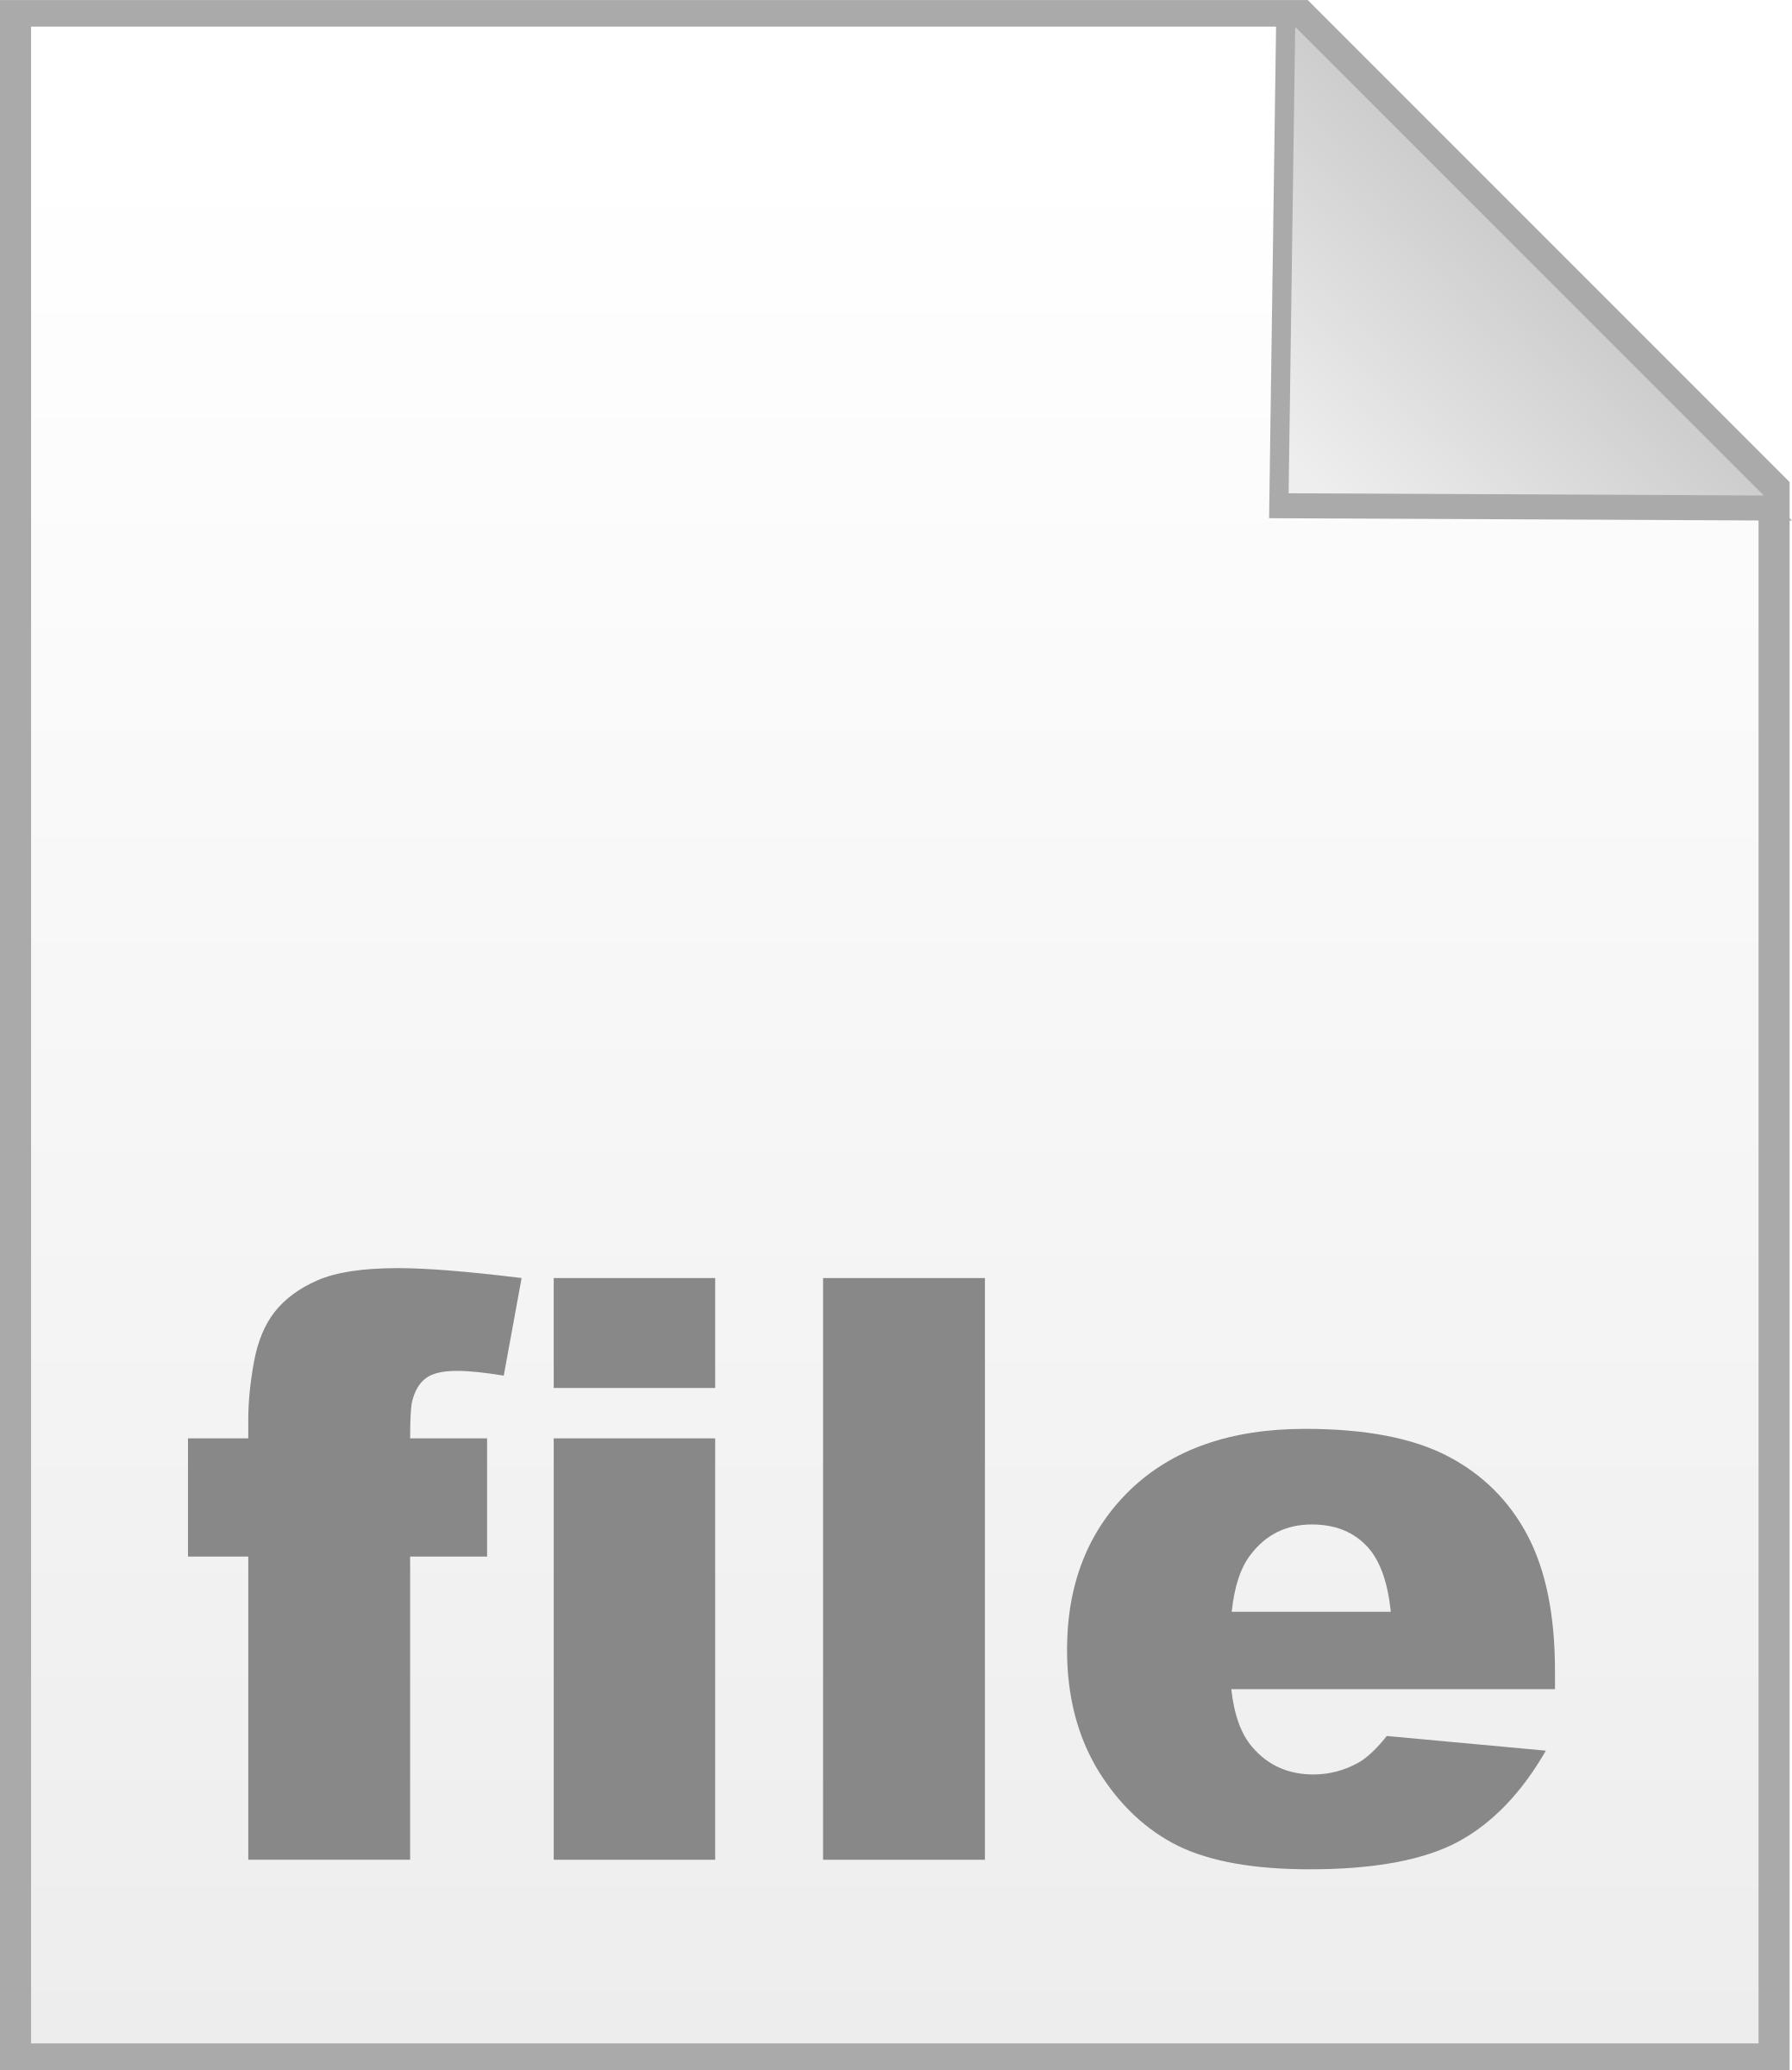 Empty unix file icons